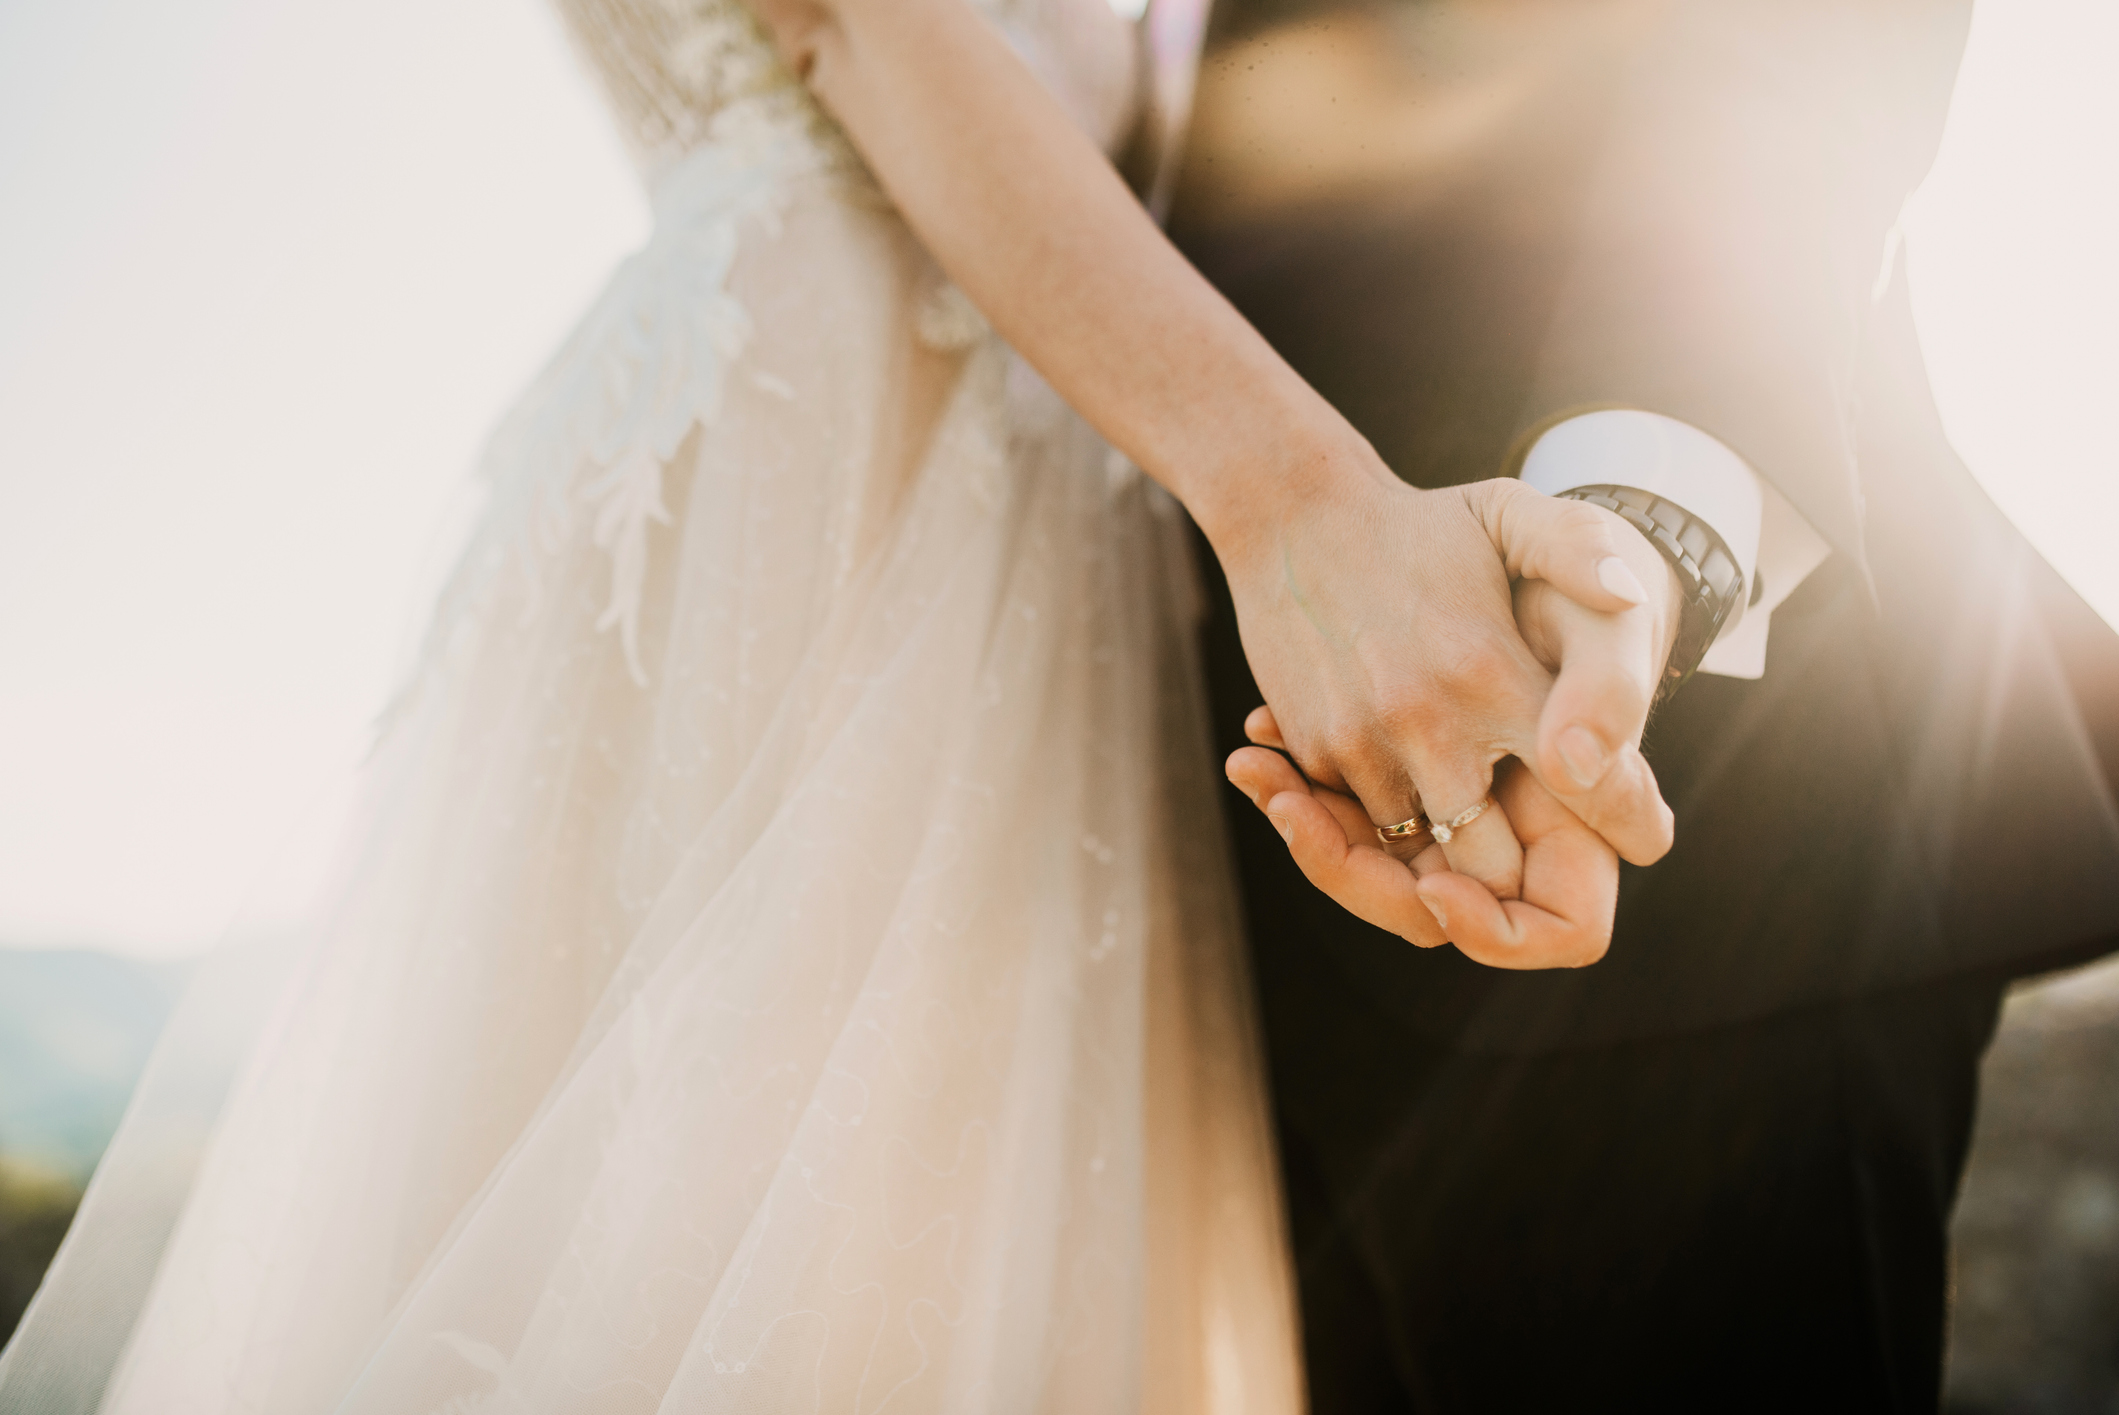 Bride and groom's hands (Photo: iStock - Vasil Dimitrov)